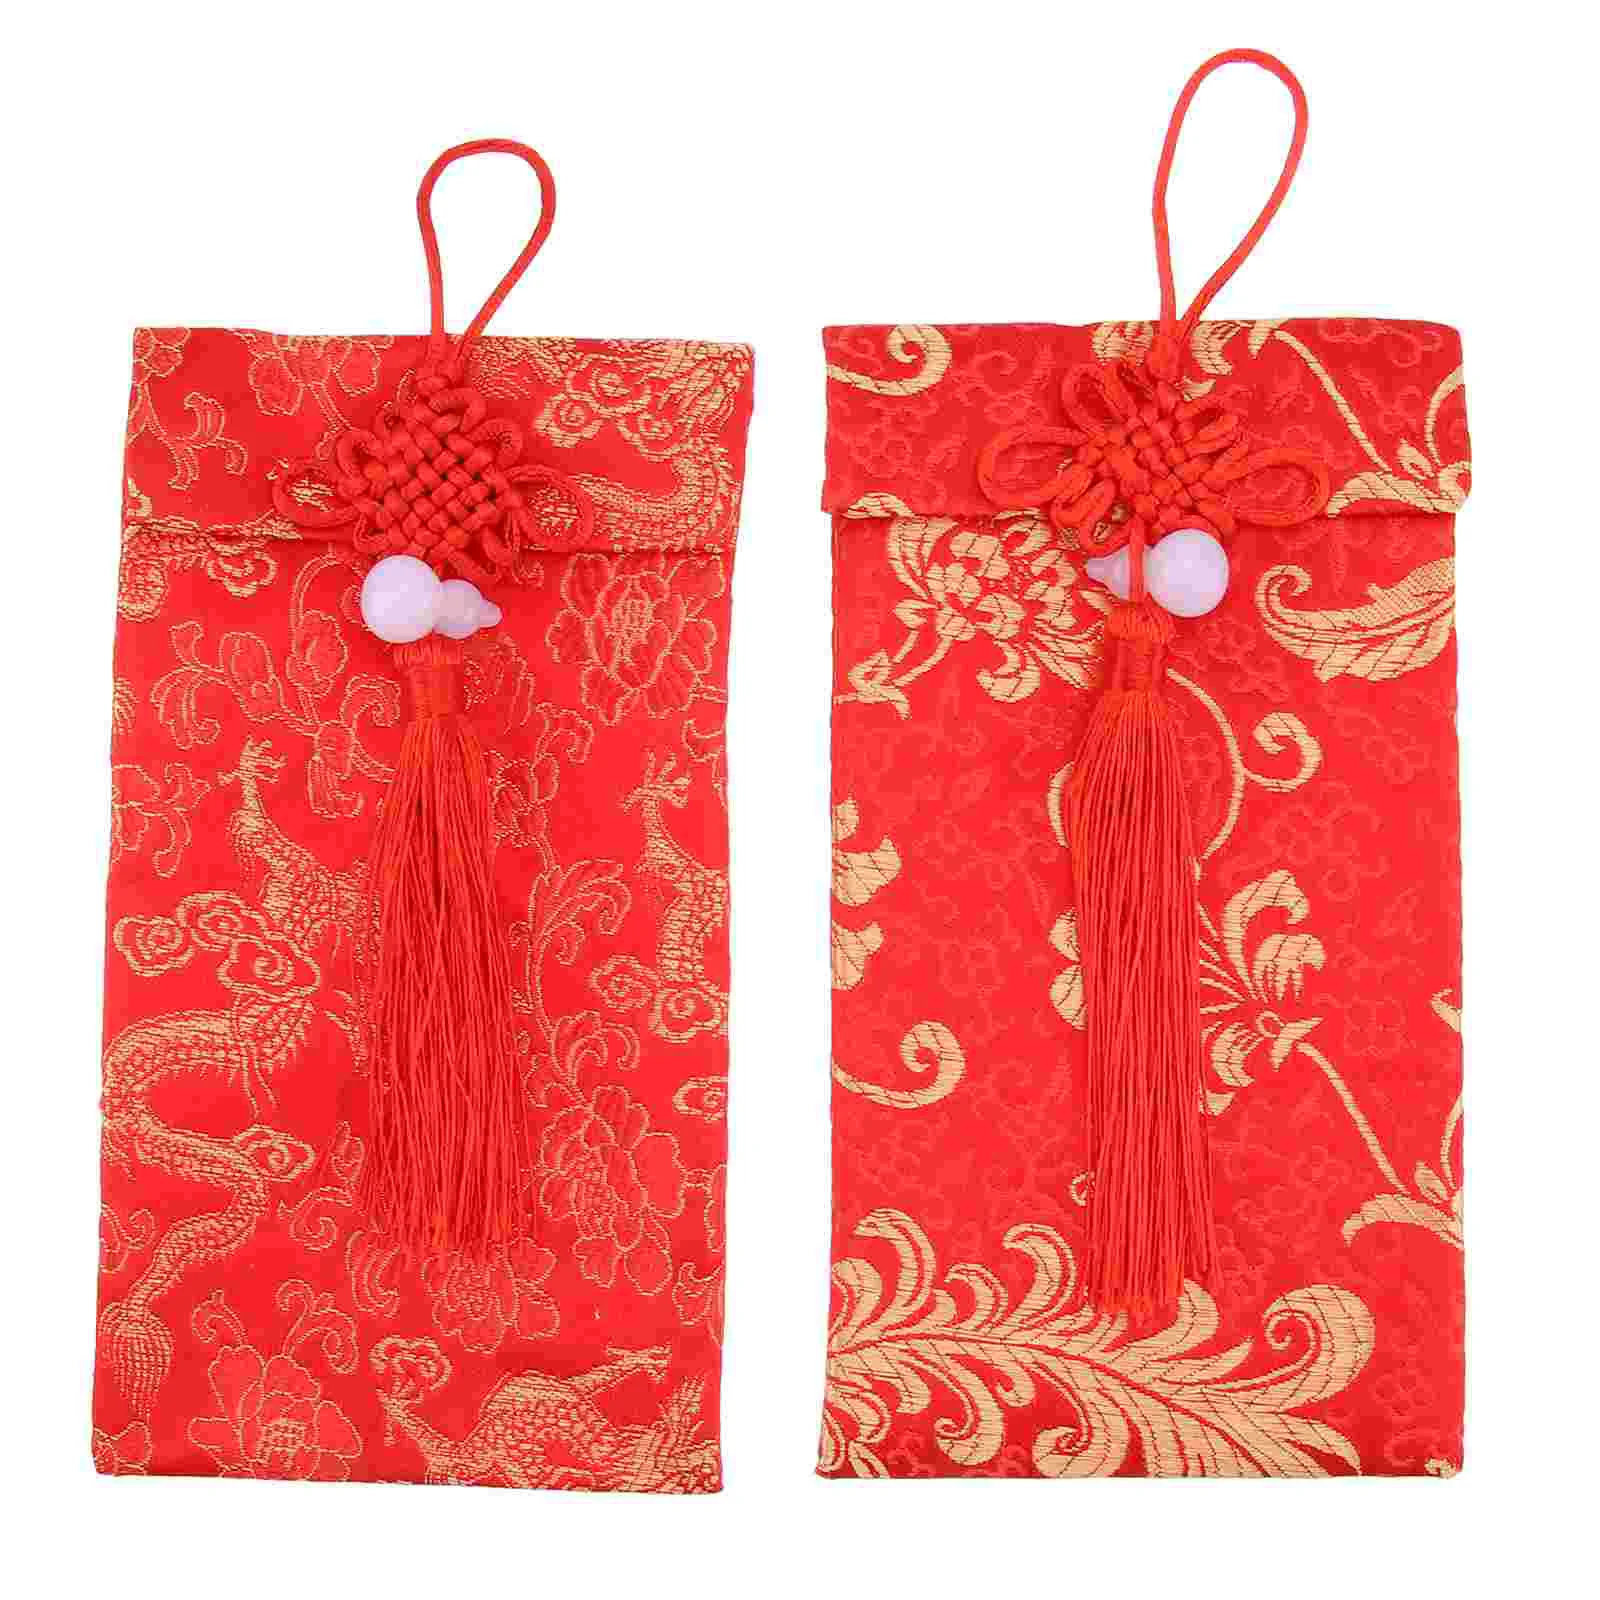 

2 Pcs New Year Red Envelope Wedding Money Pocket Celebration Bag Thousand Yuan Decorative Party Gifts Chic